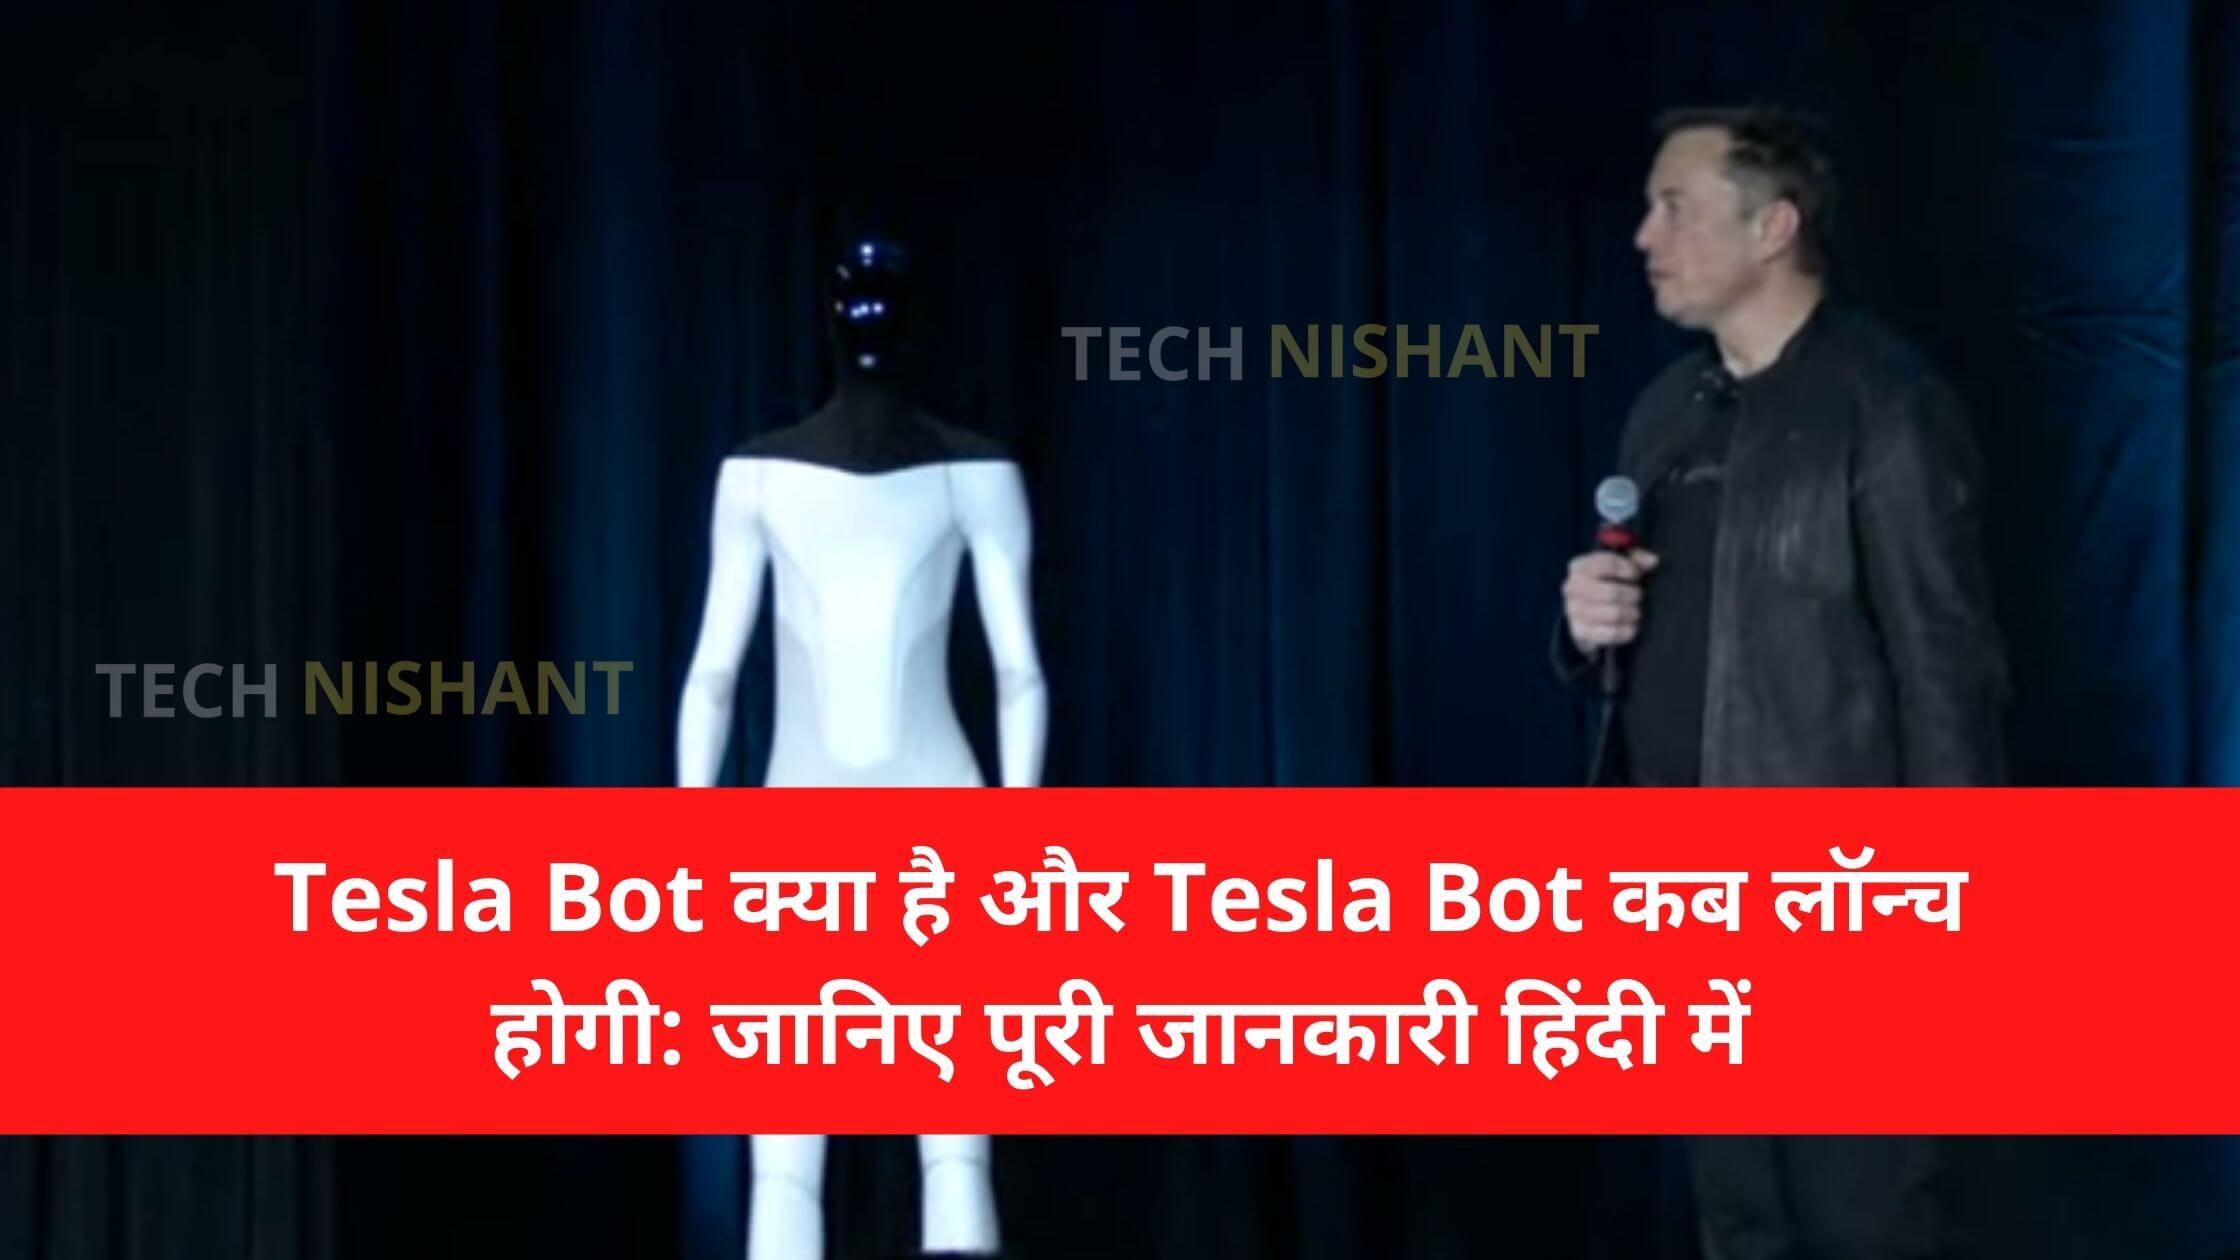 Tesla bot kya hai, Tesla Bot launch date, Elon Musk's Tesla